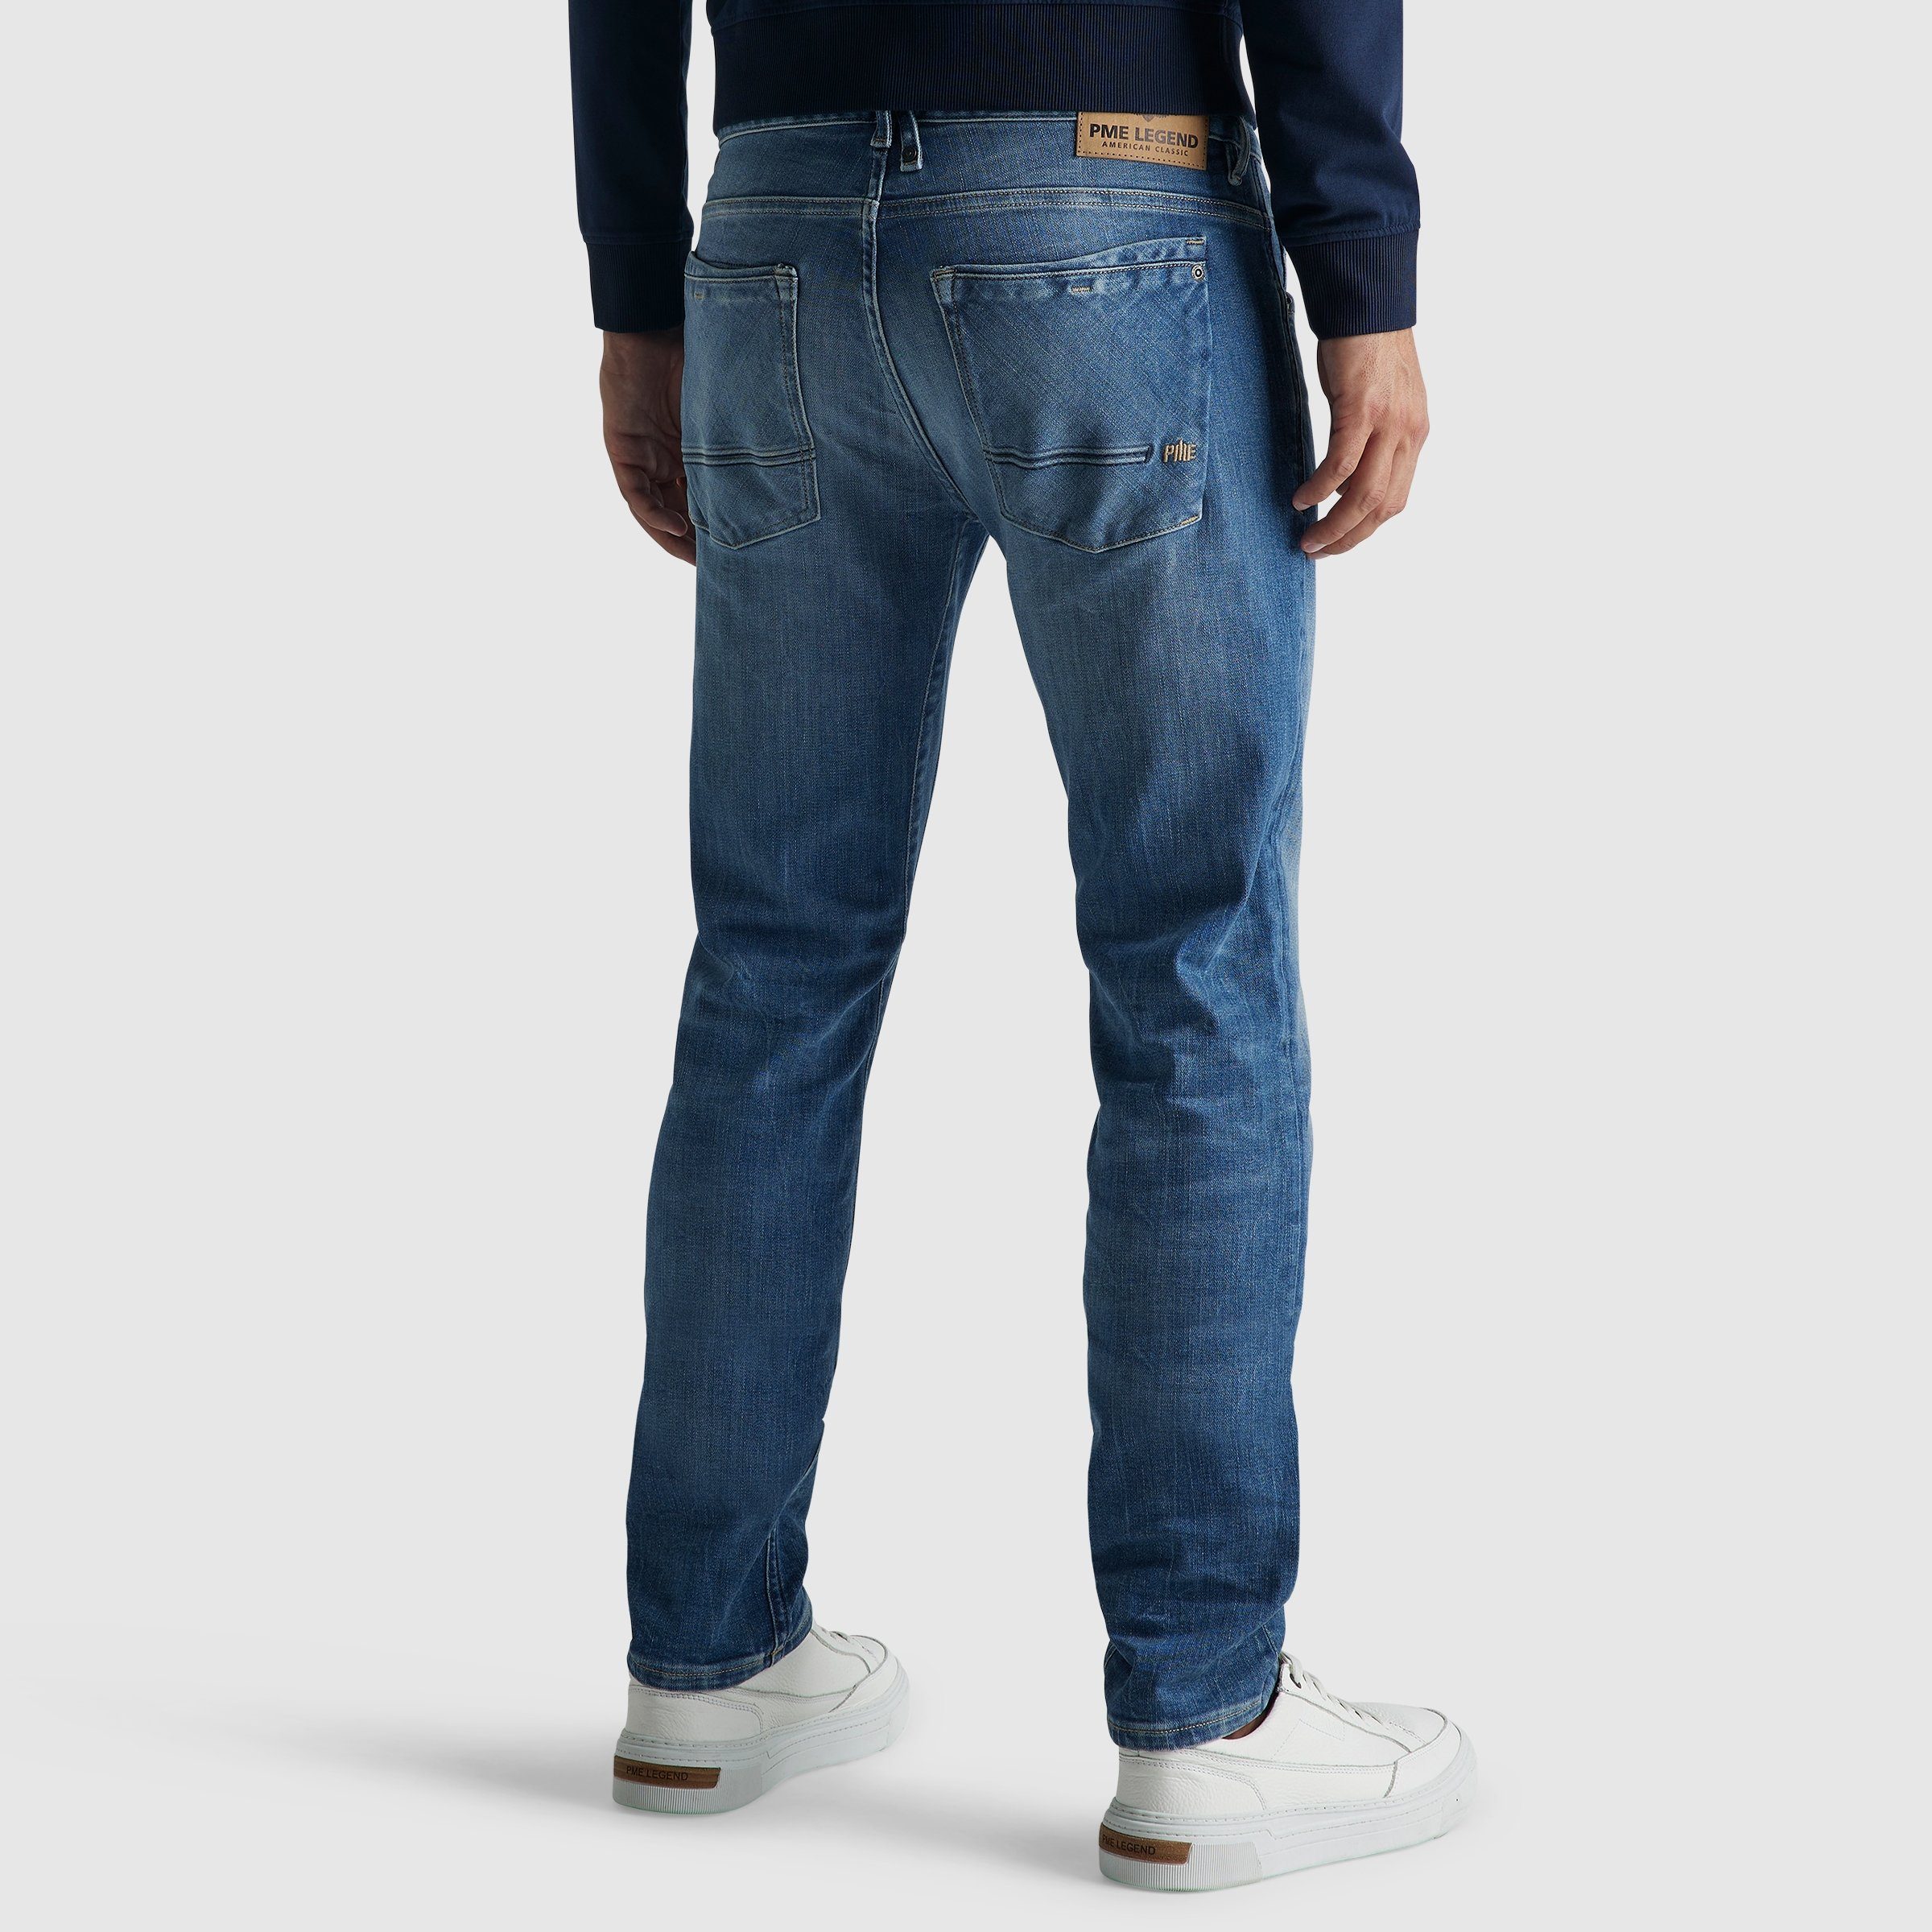 LEGEND 3.0 PME COMMANDER LEGEND PME 5-Pocket-Jeans PTR180-FMB blue fresh mid